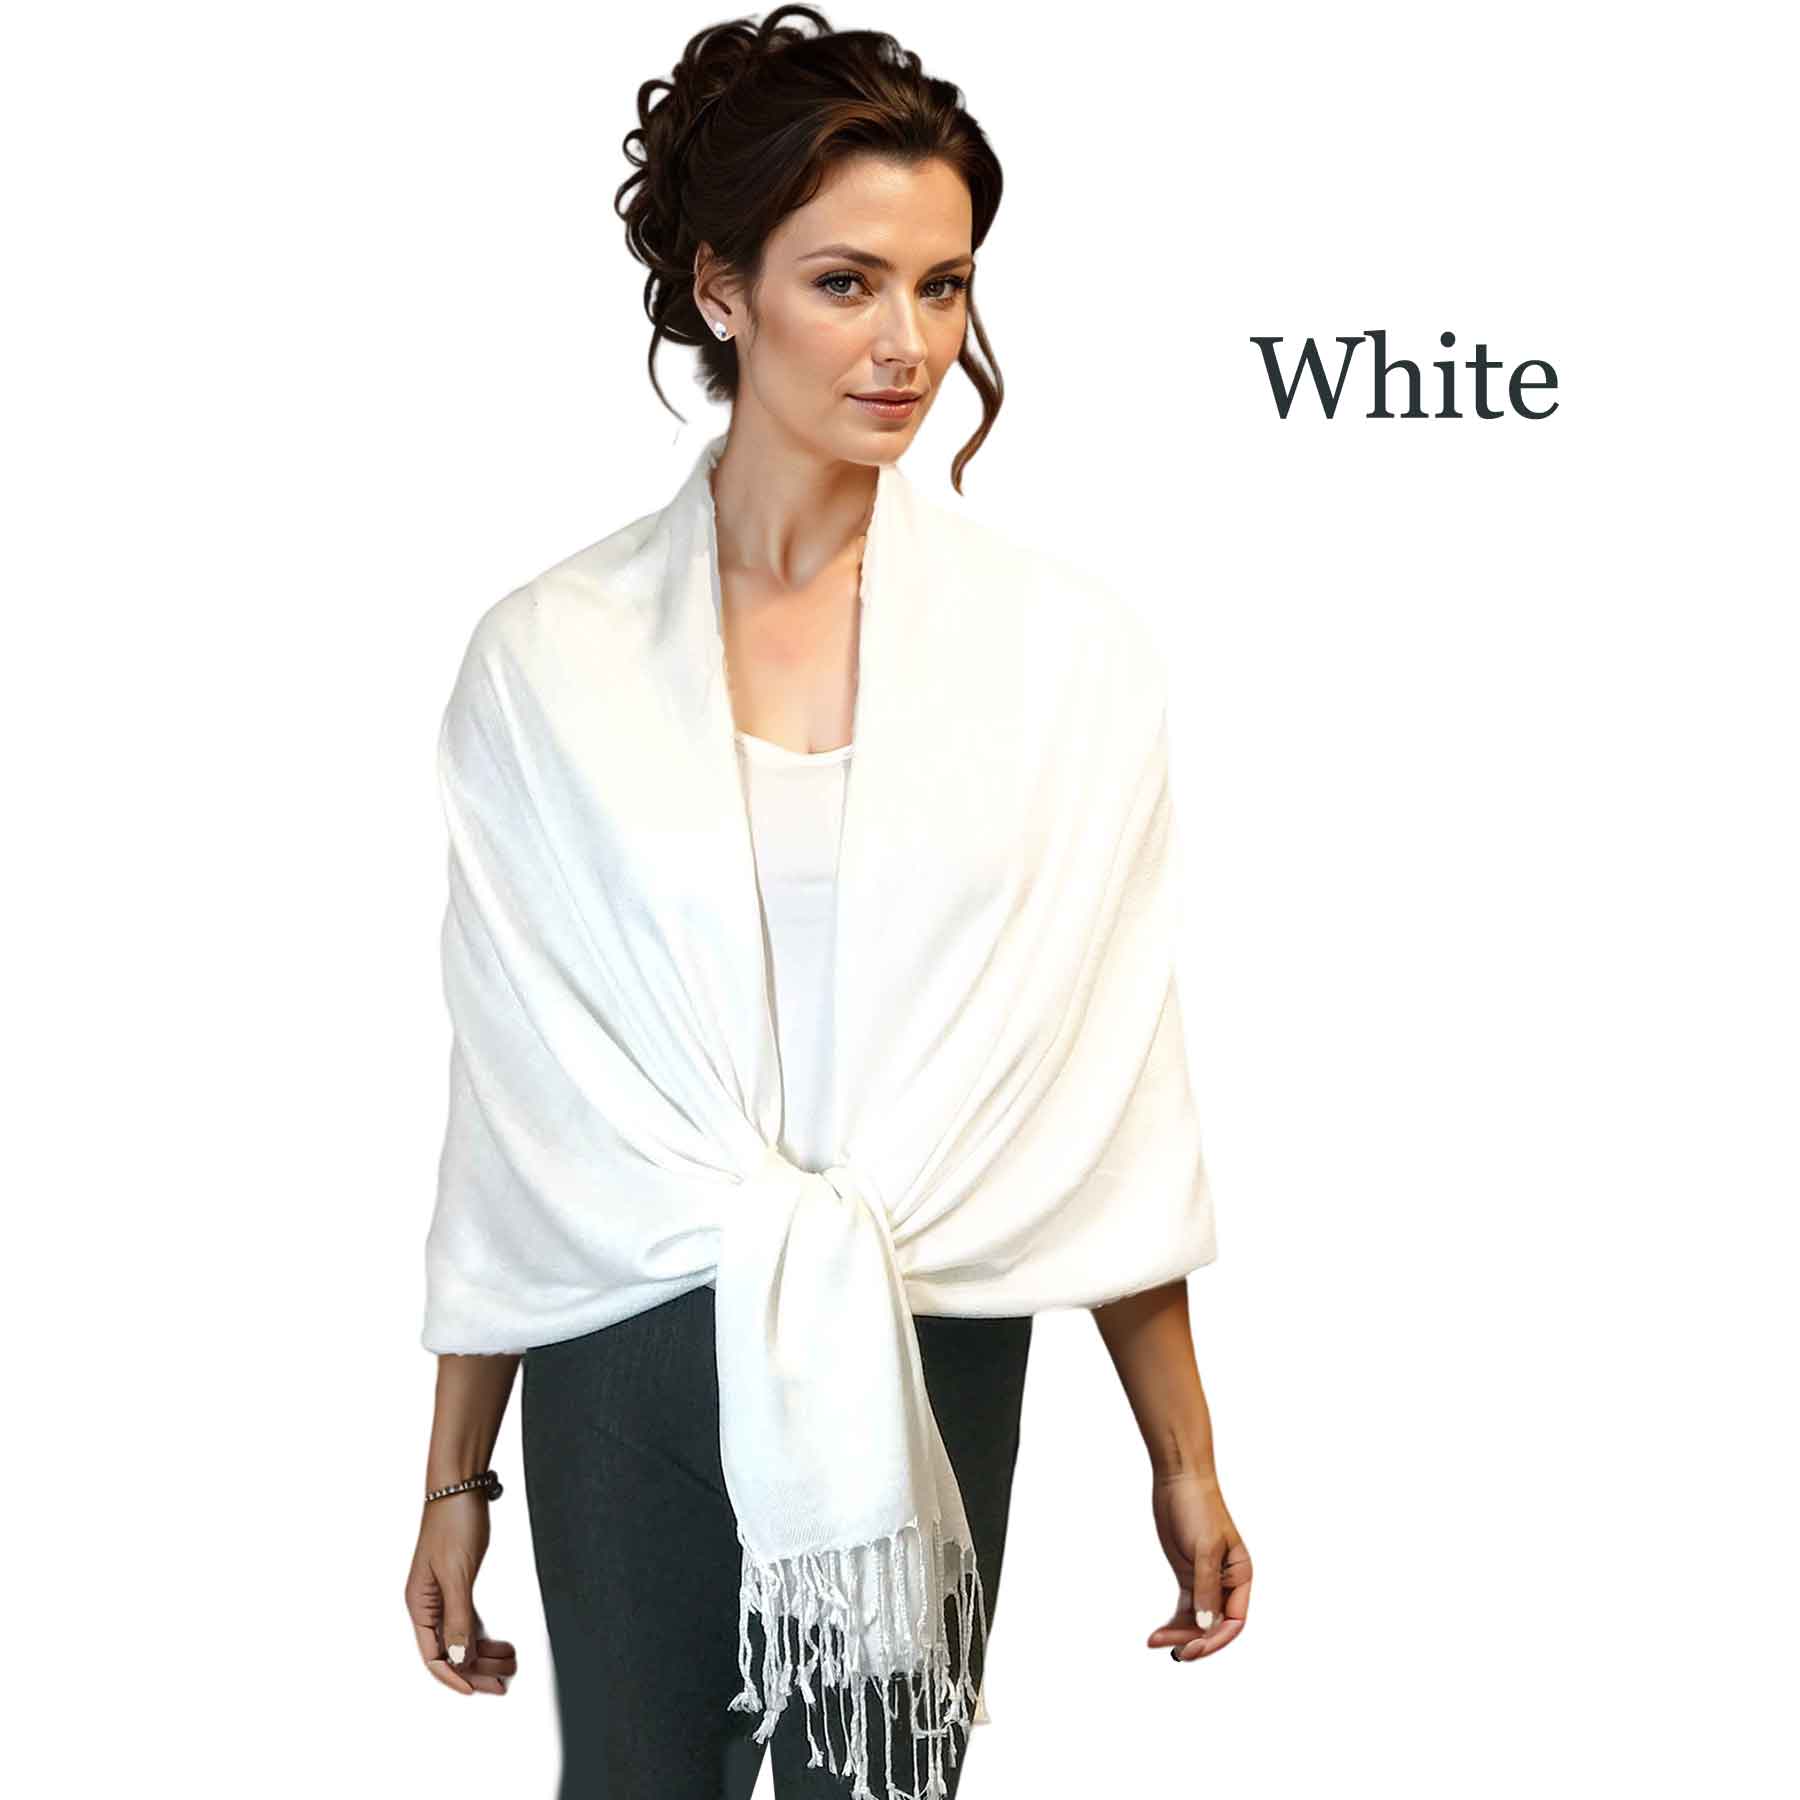 White #01<br>
Pashmina Style Shawl